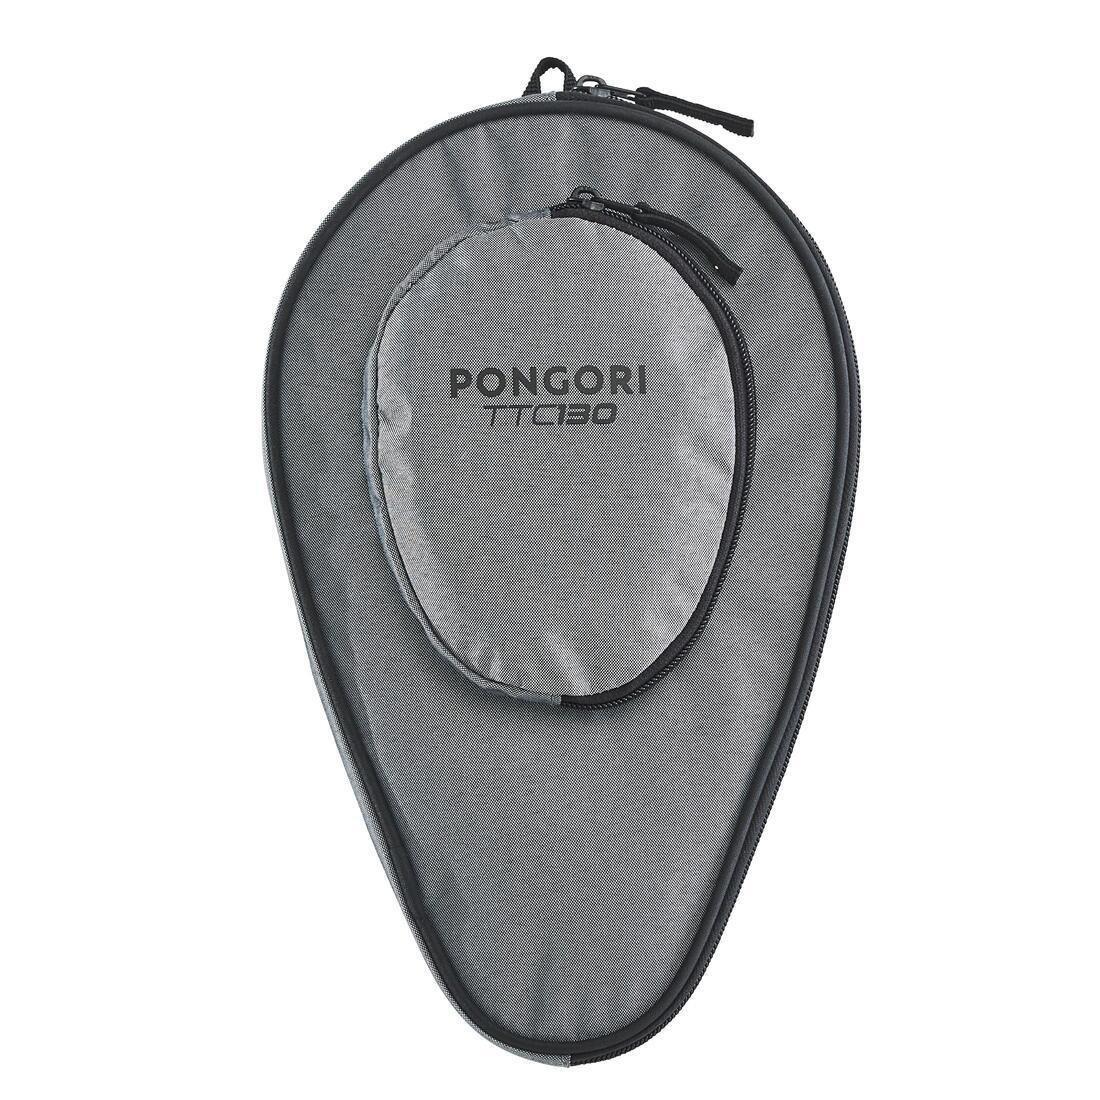 PONGORI - Table Tennis Bat Cover Ttc 130, Black